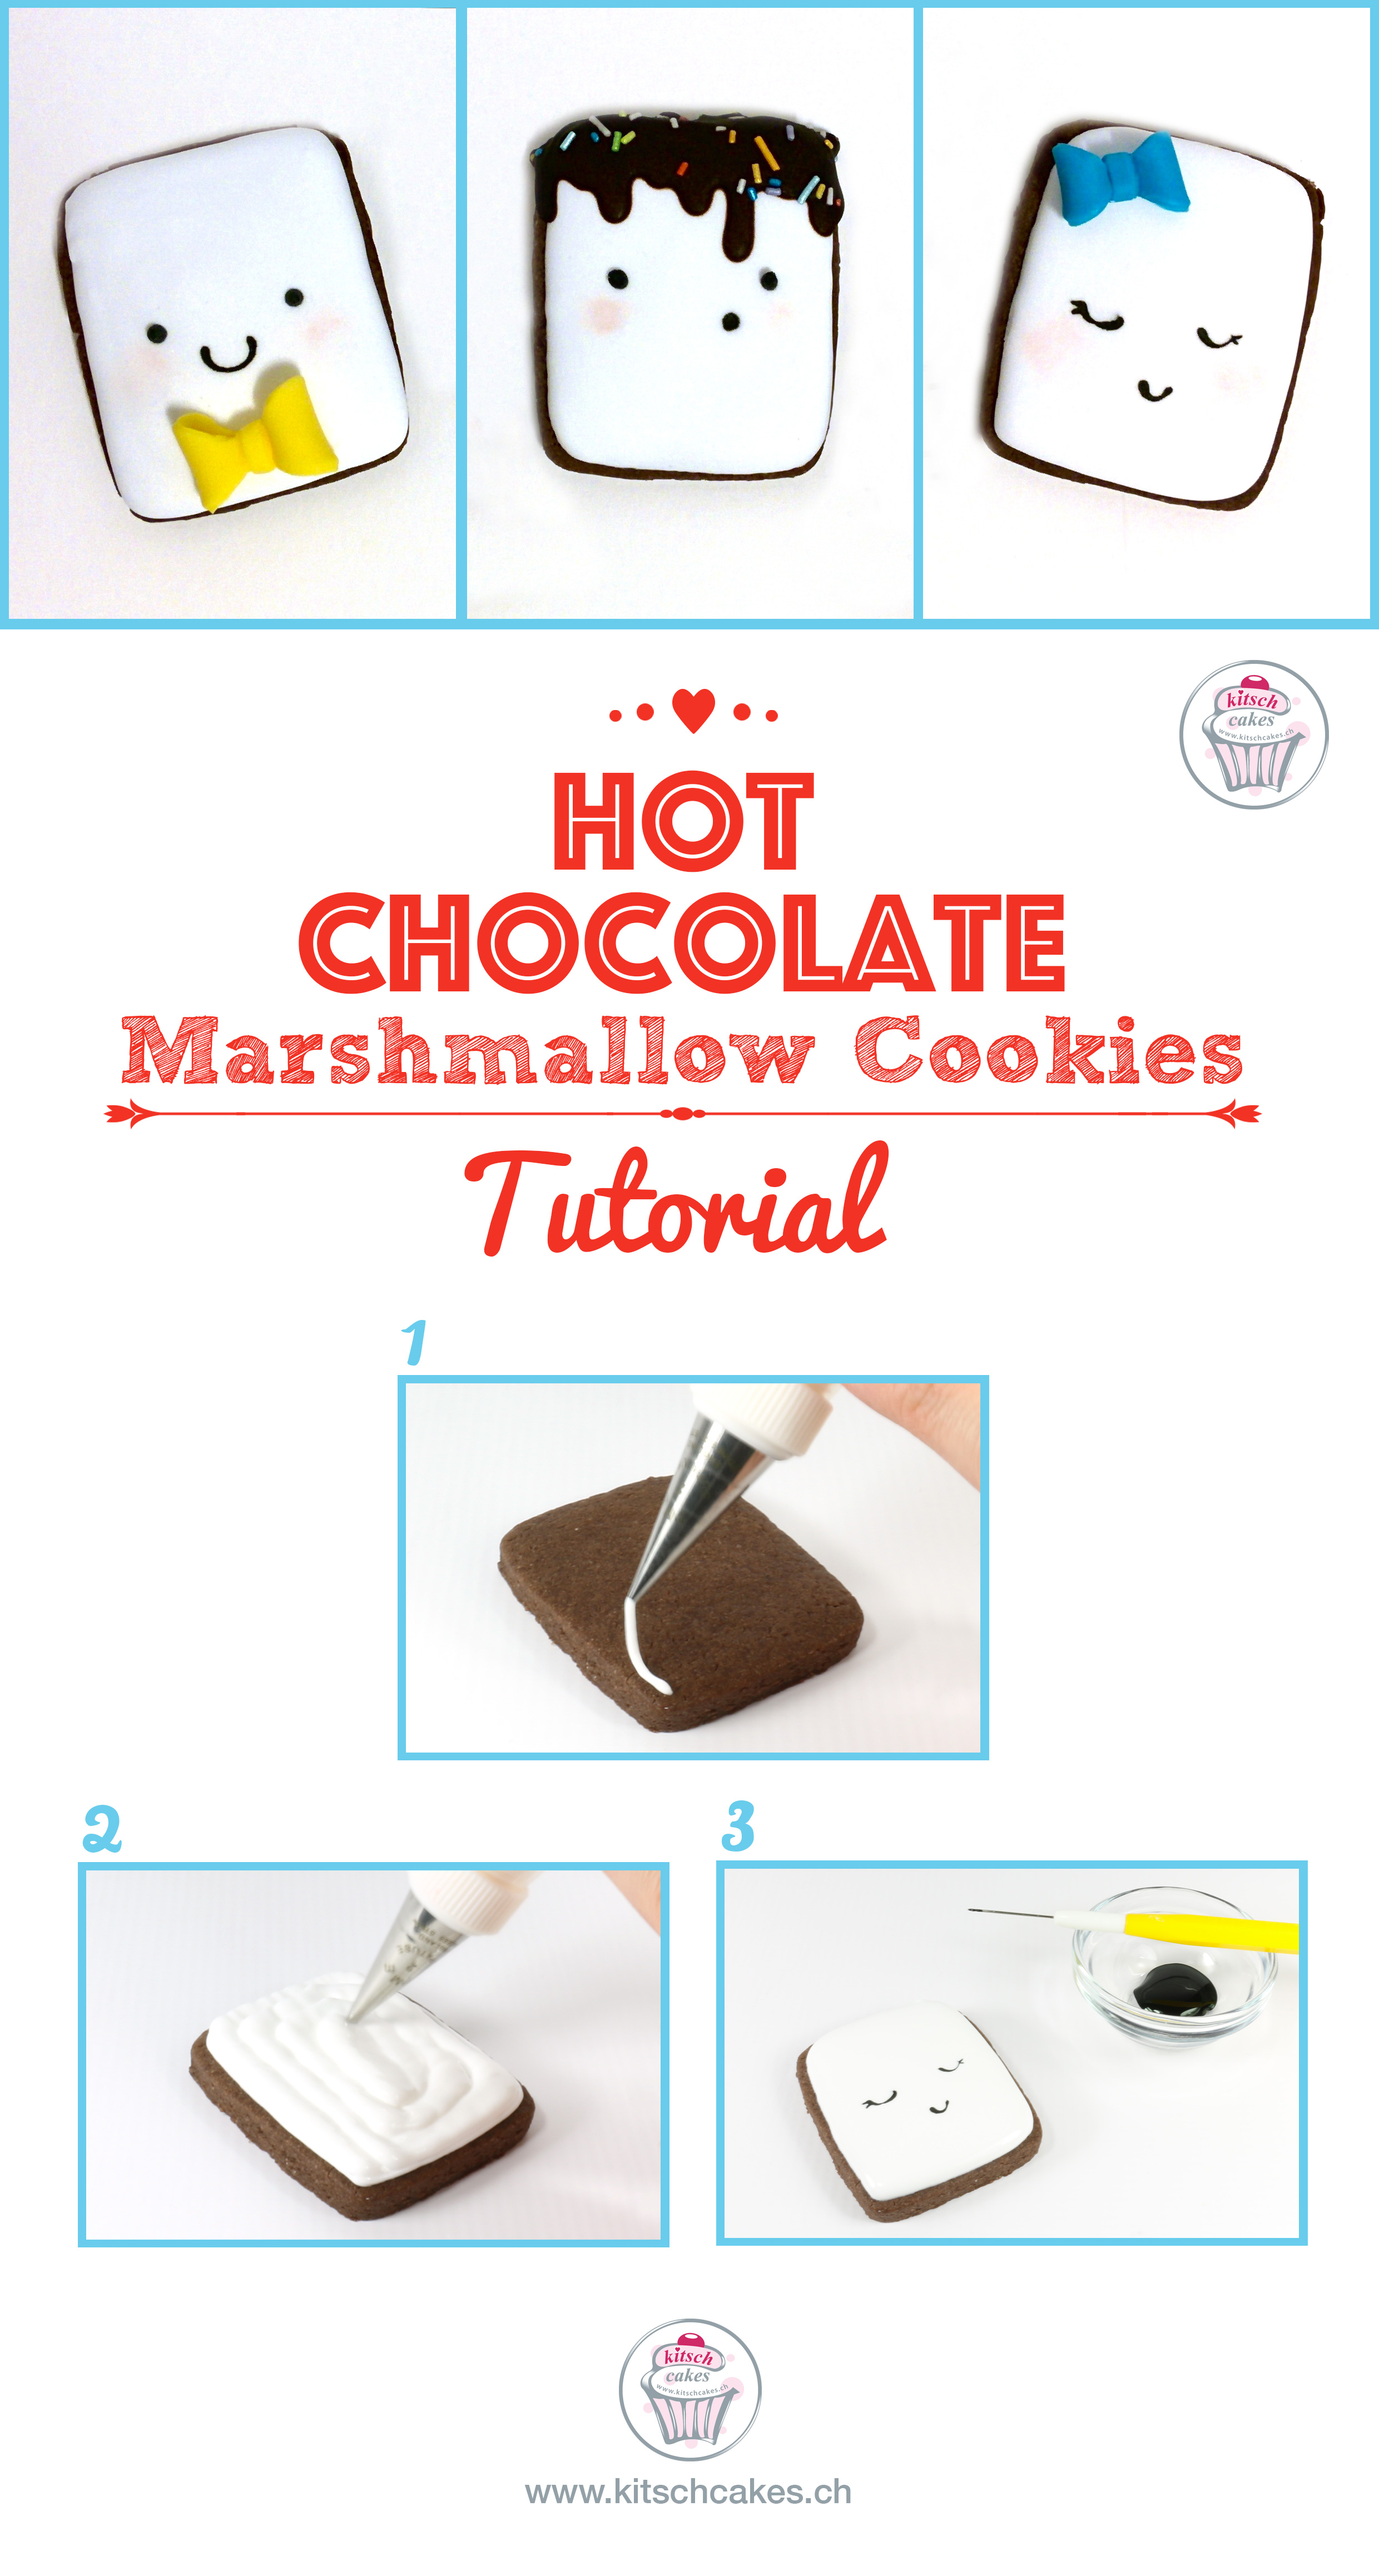 Marshmallow Cookies - Hot Chocolate - Tutorial